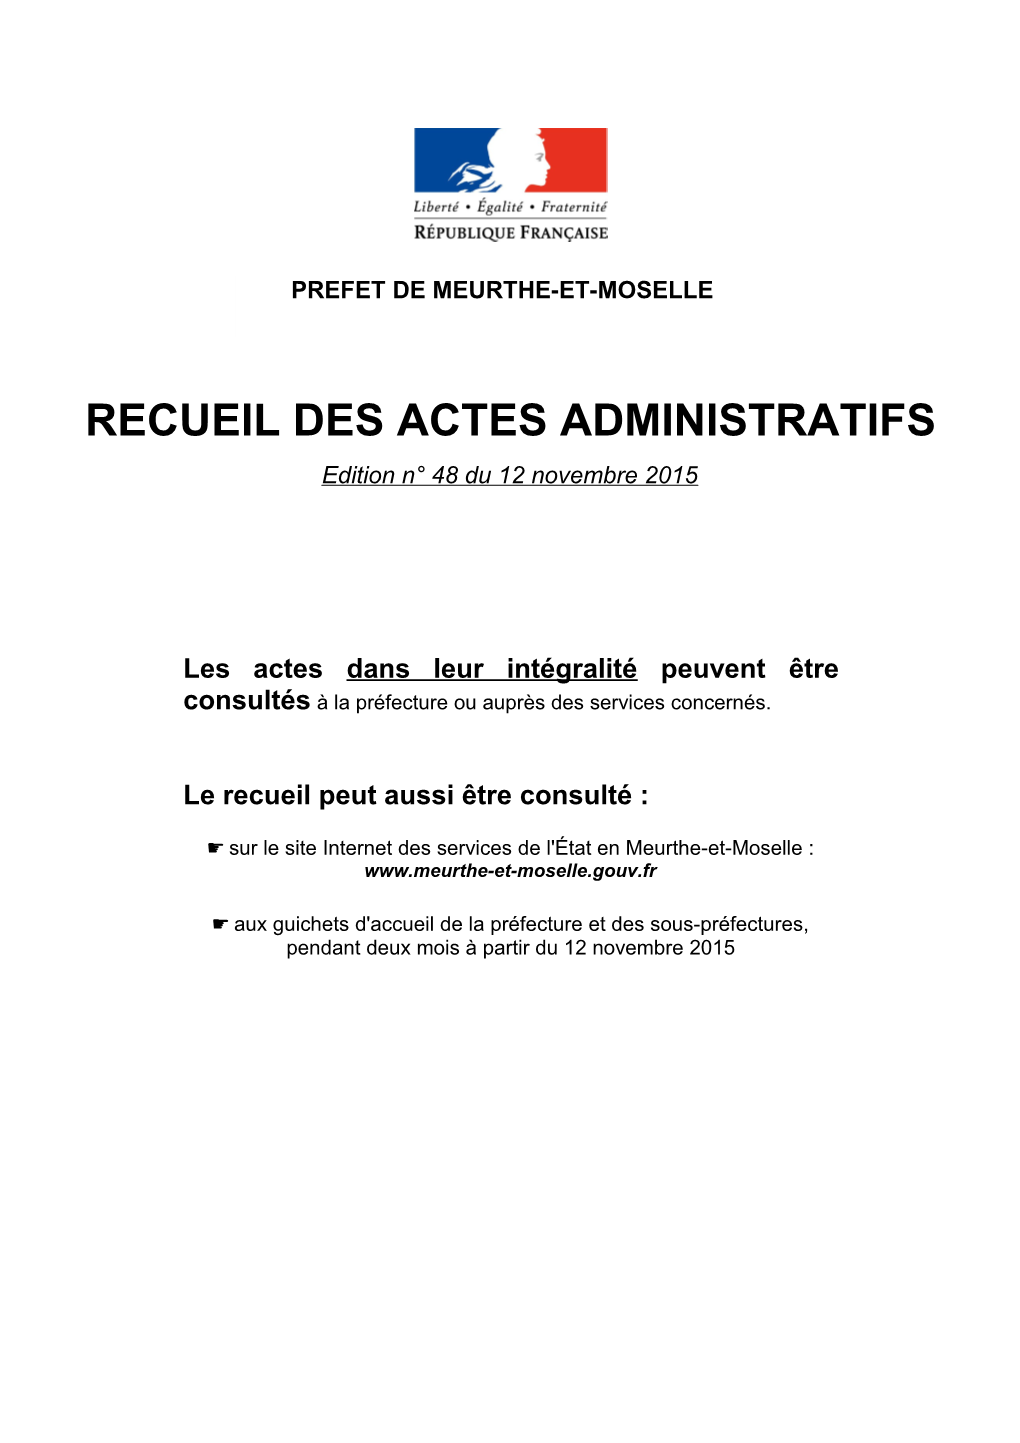 RECUEIL DES ACTES ADMINISTRATIFS Edition N° 48 Du 12 Novembre 2015